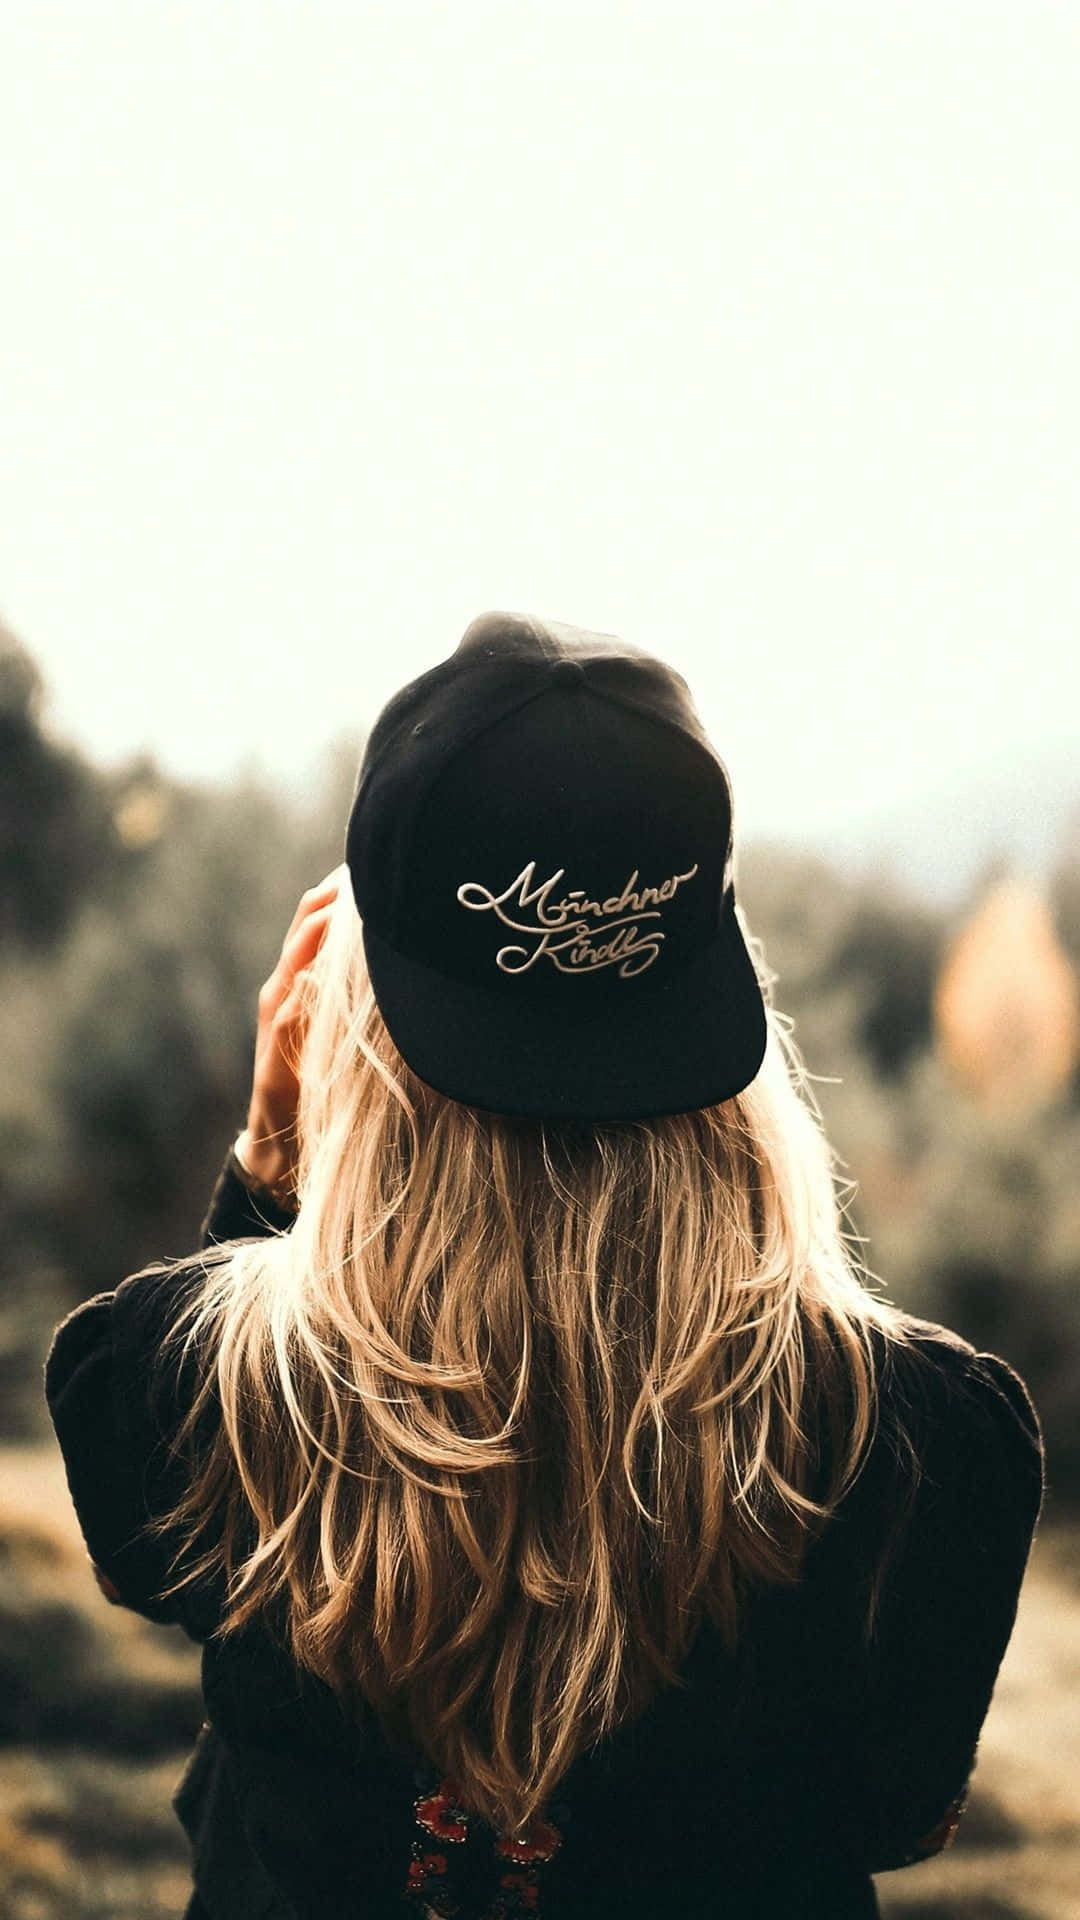 Cool Blonde Girl Wearing Cap Background